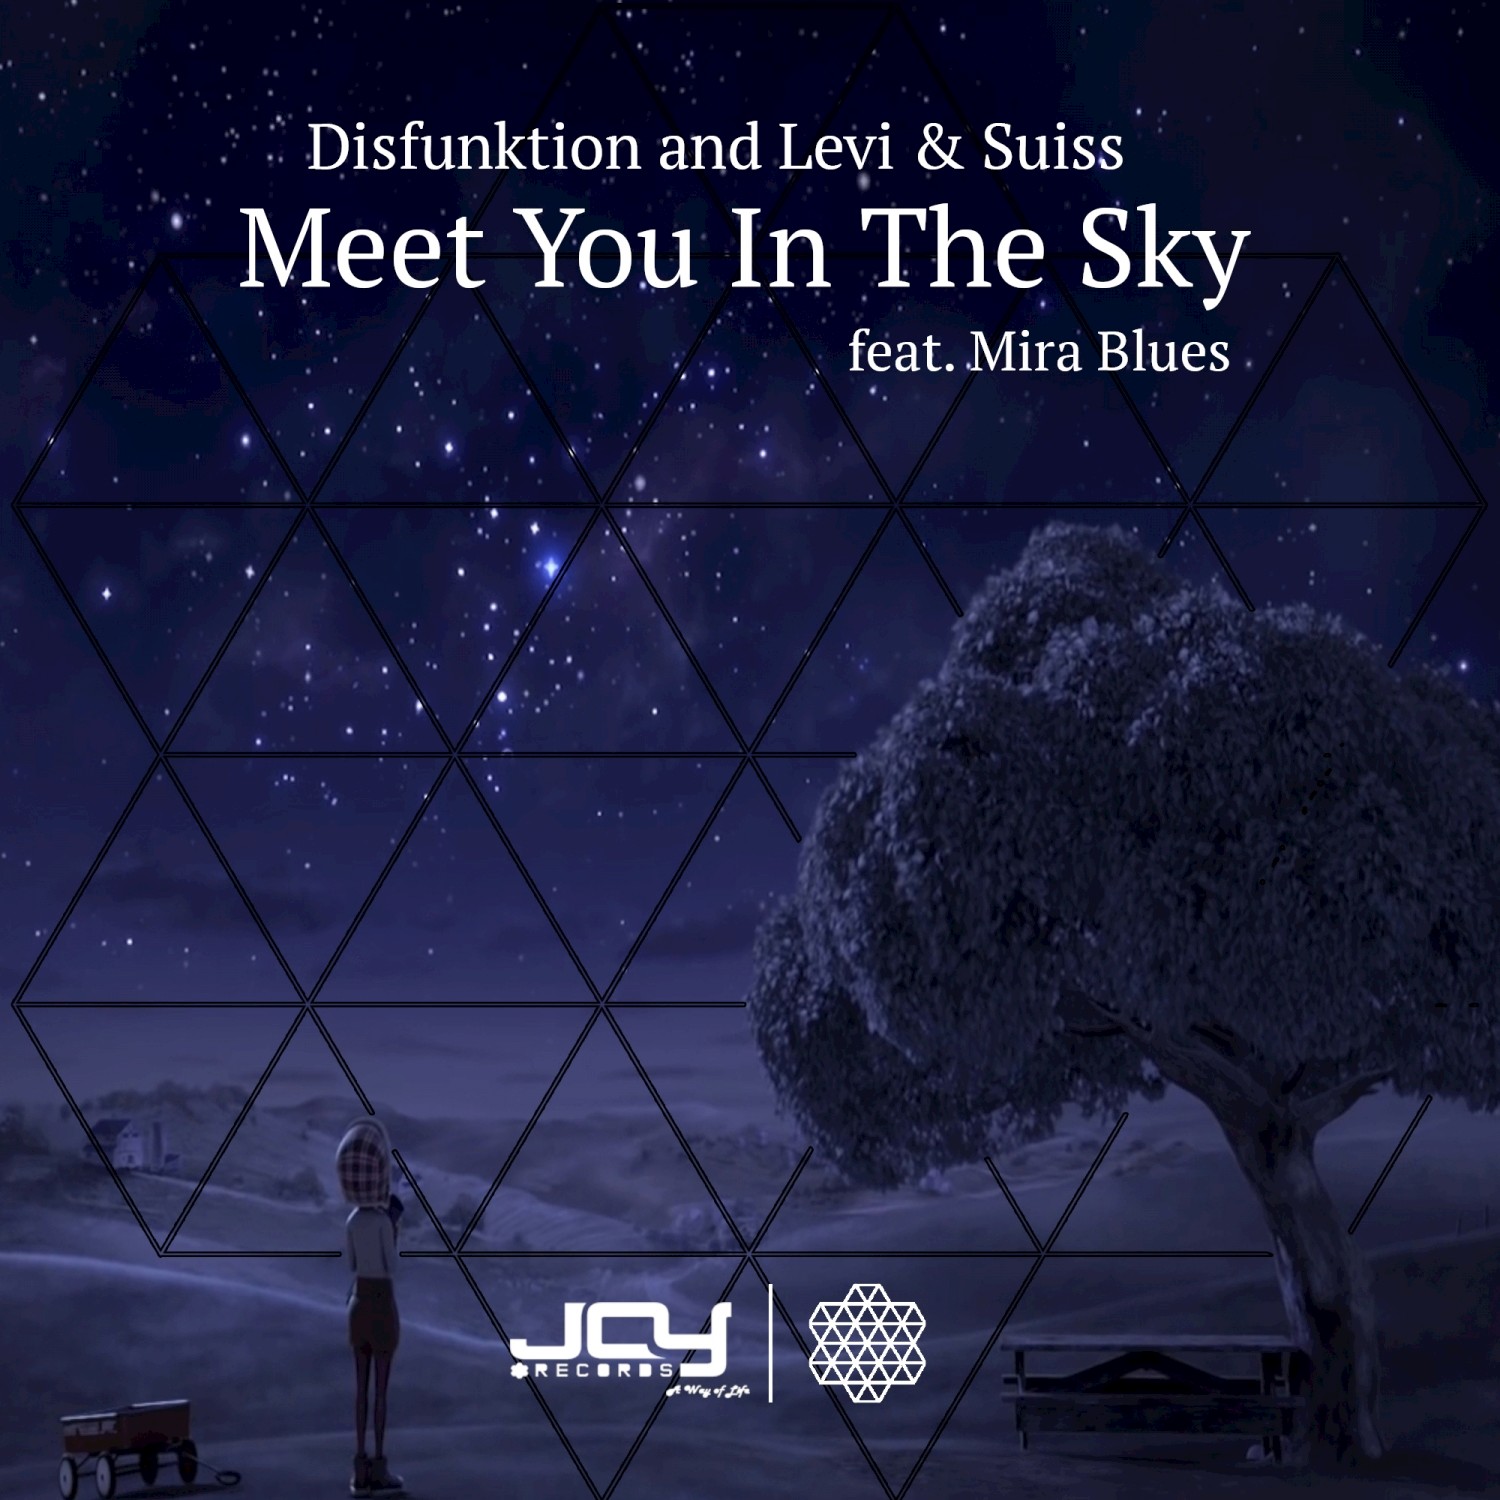 Meet You in the Sky